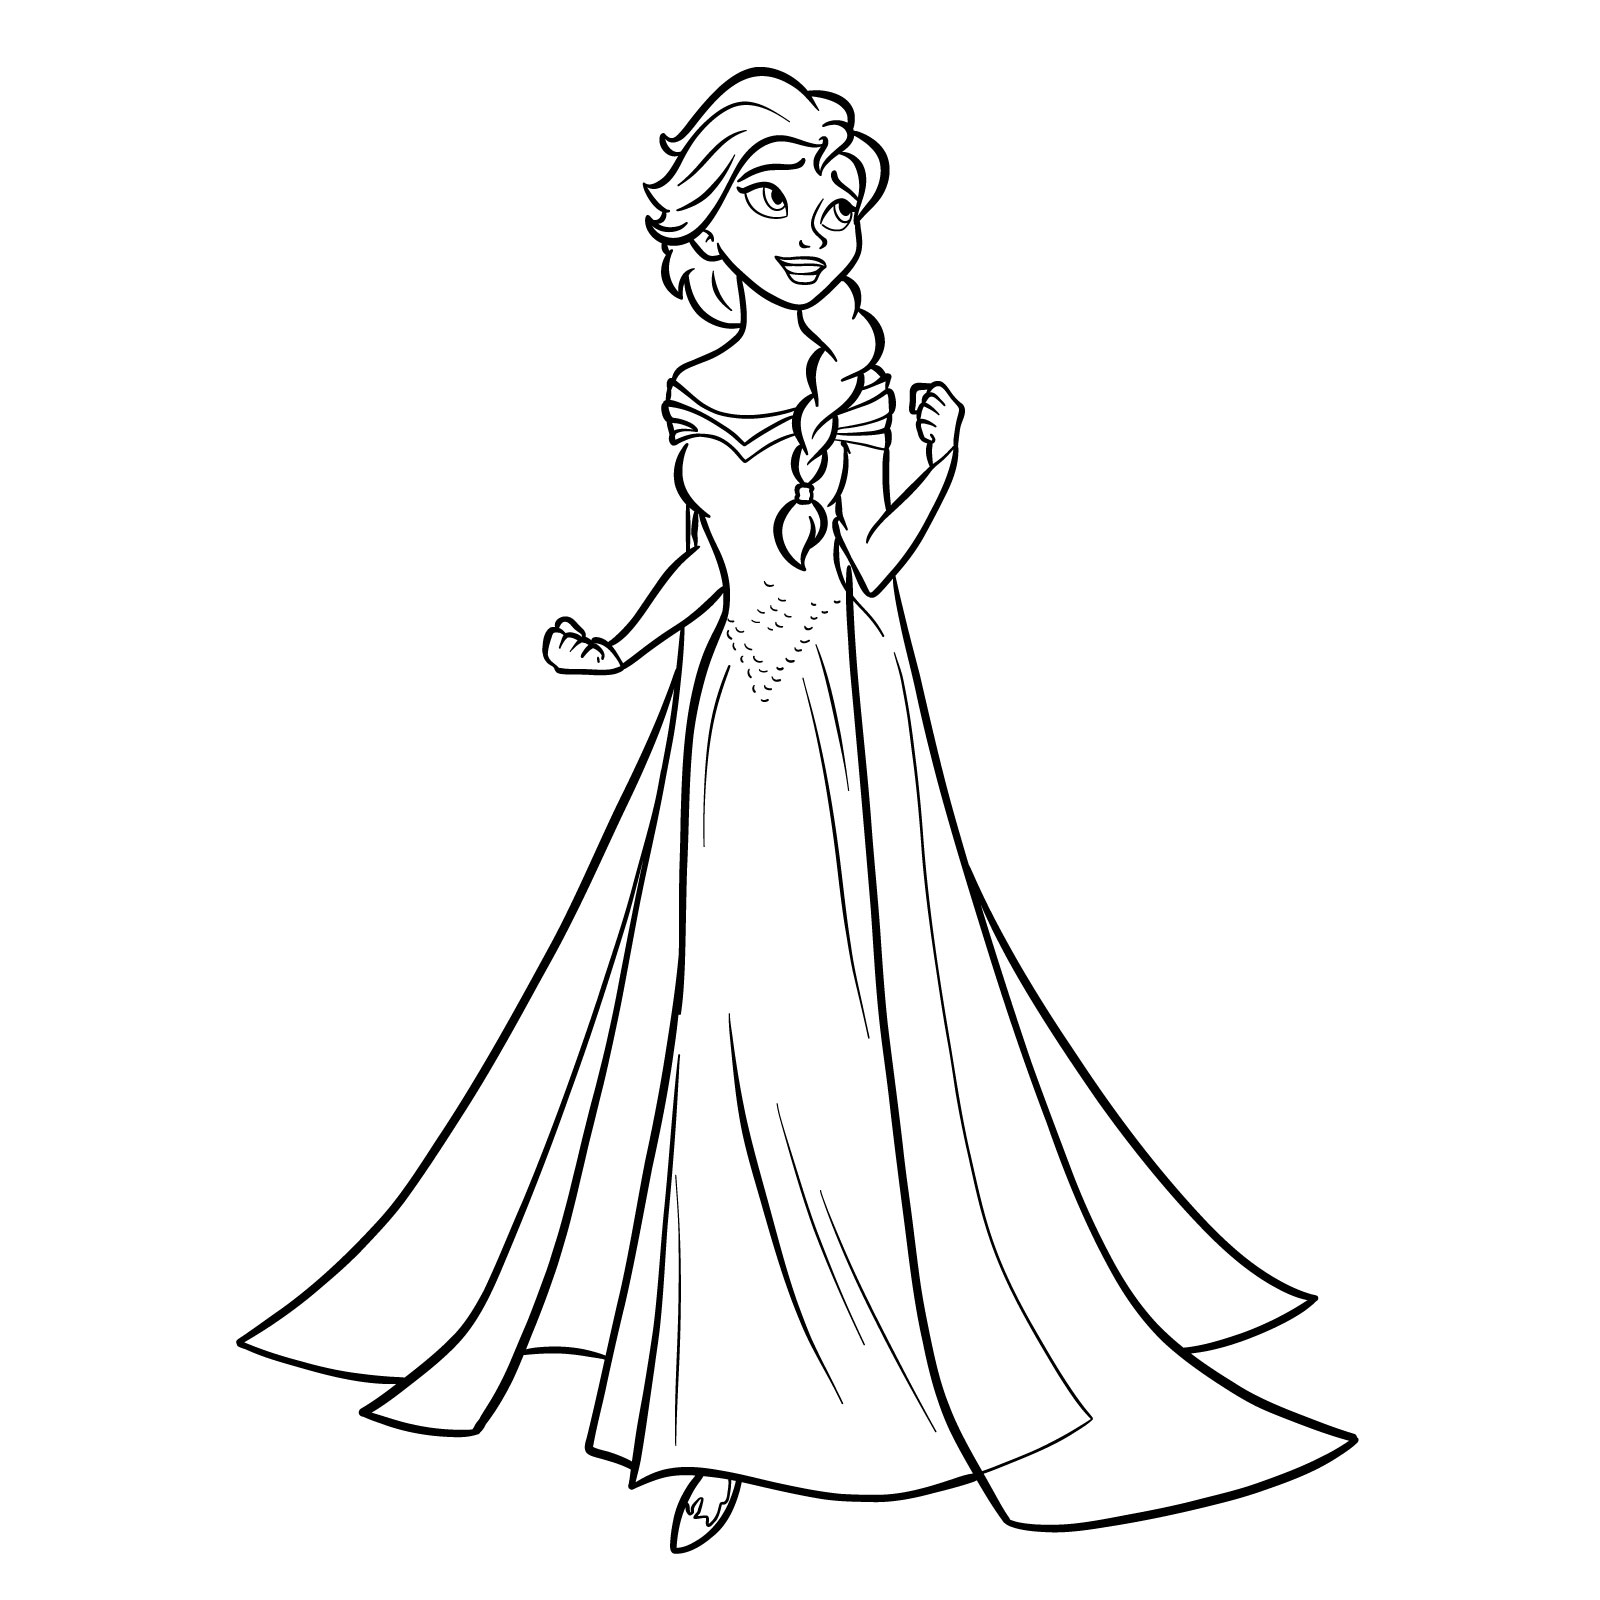 Easy drawing of Queen Elsa singing - final step